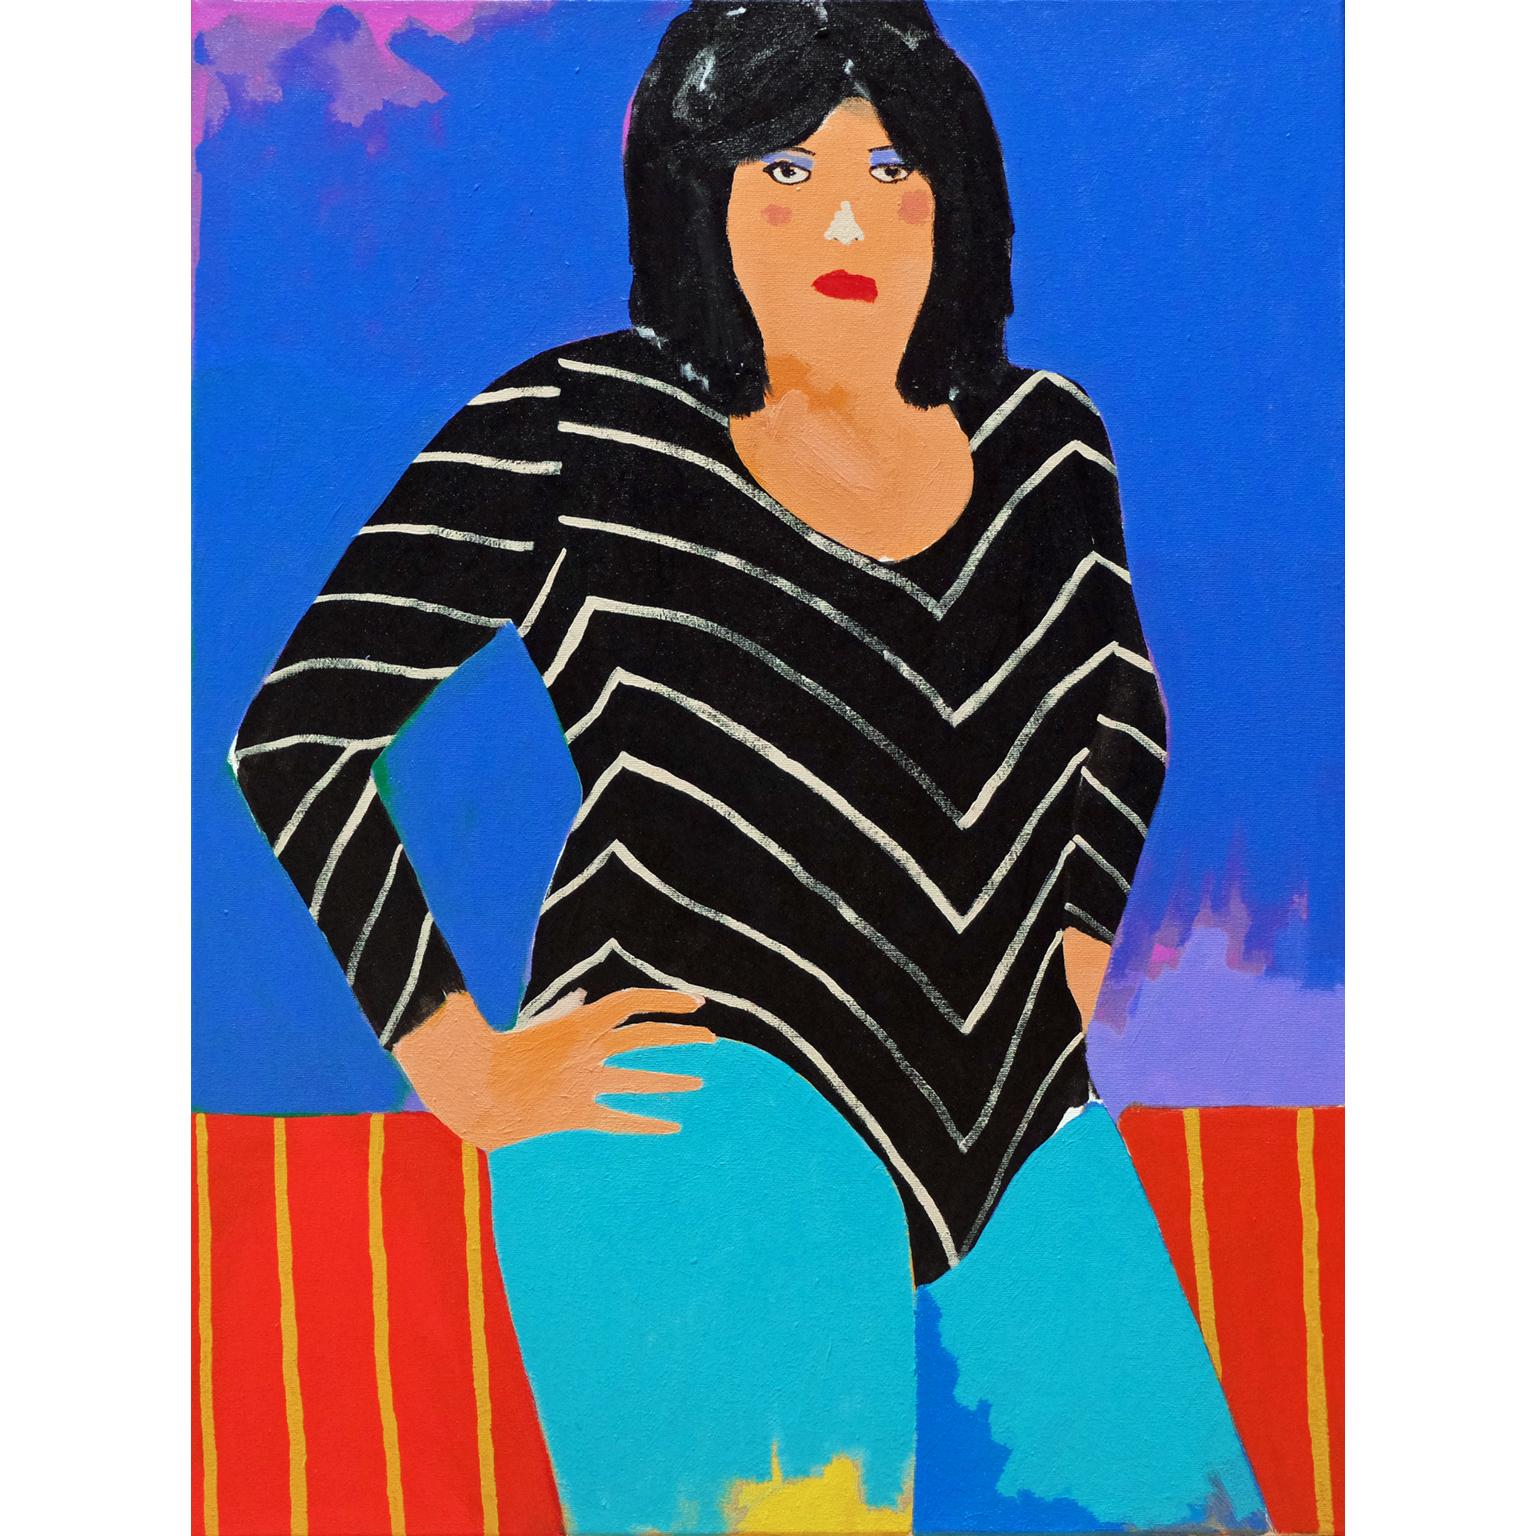 Modern 'The Furious Julie' Portrait Painting by Alan Fears Pop Art Wrestling Lady